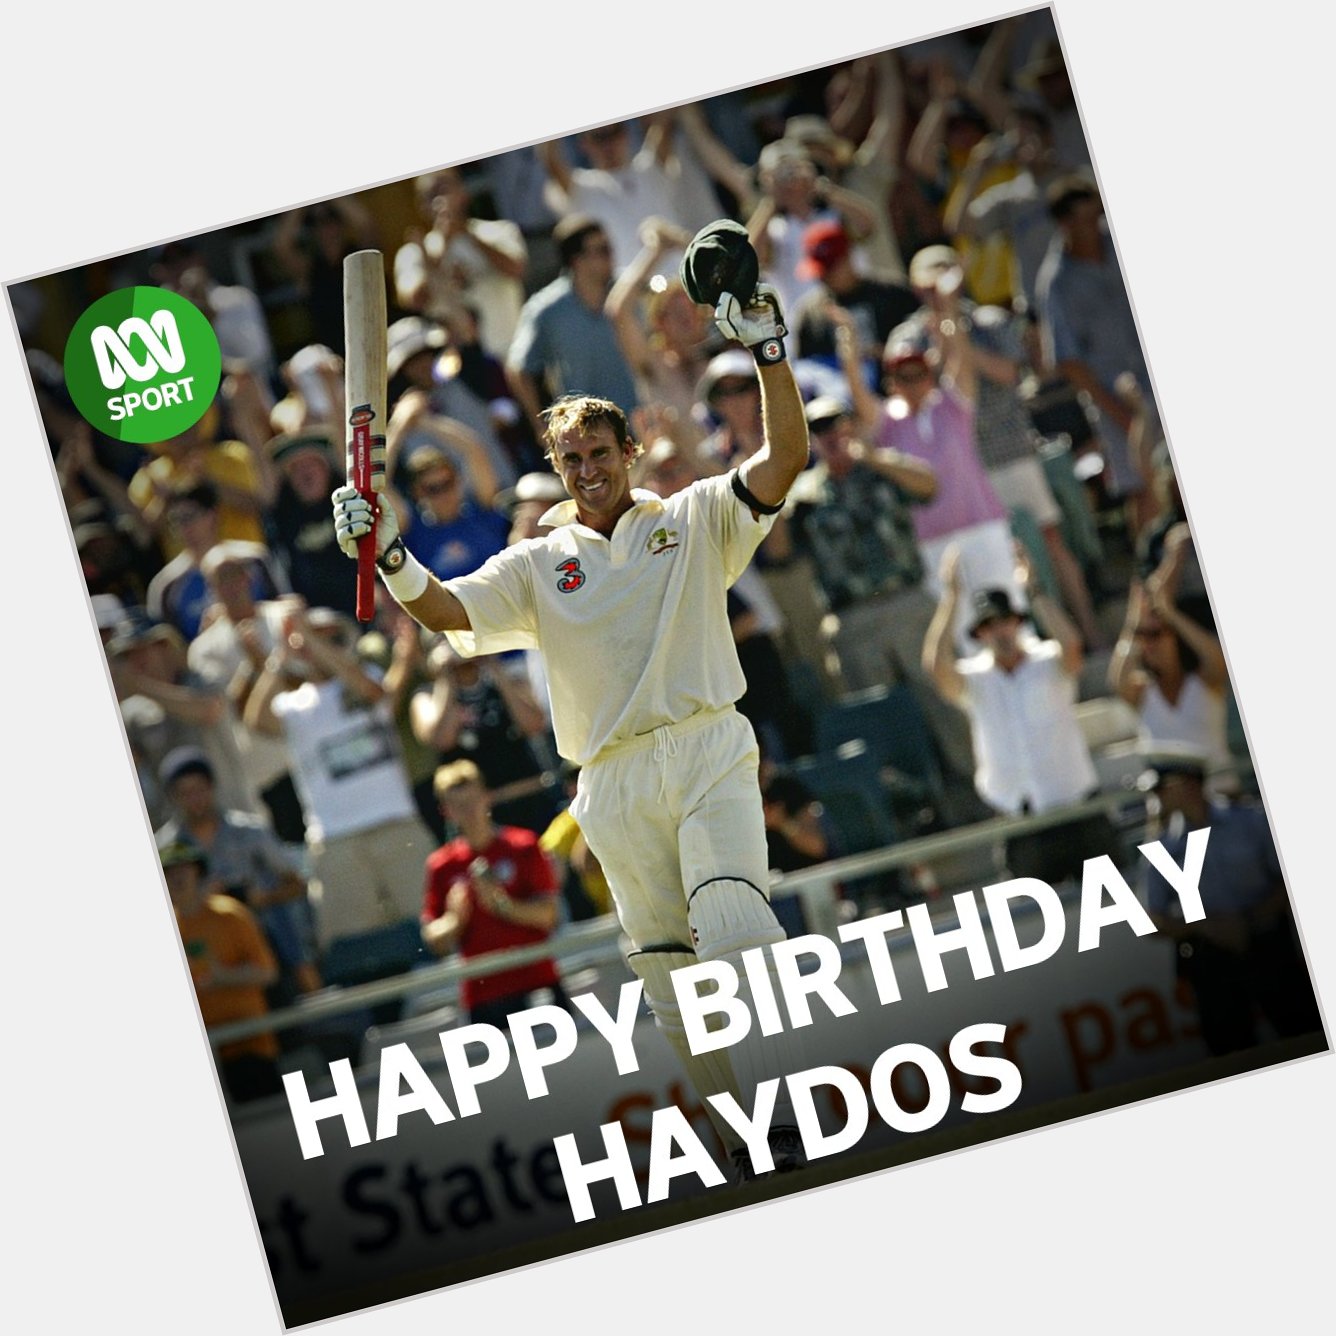  Happy Birthday to the great Matthew Hayden!

What\s your favourite Haydos memory? 